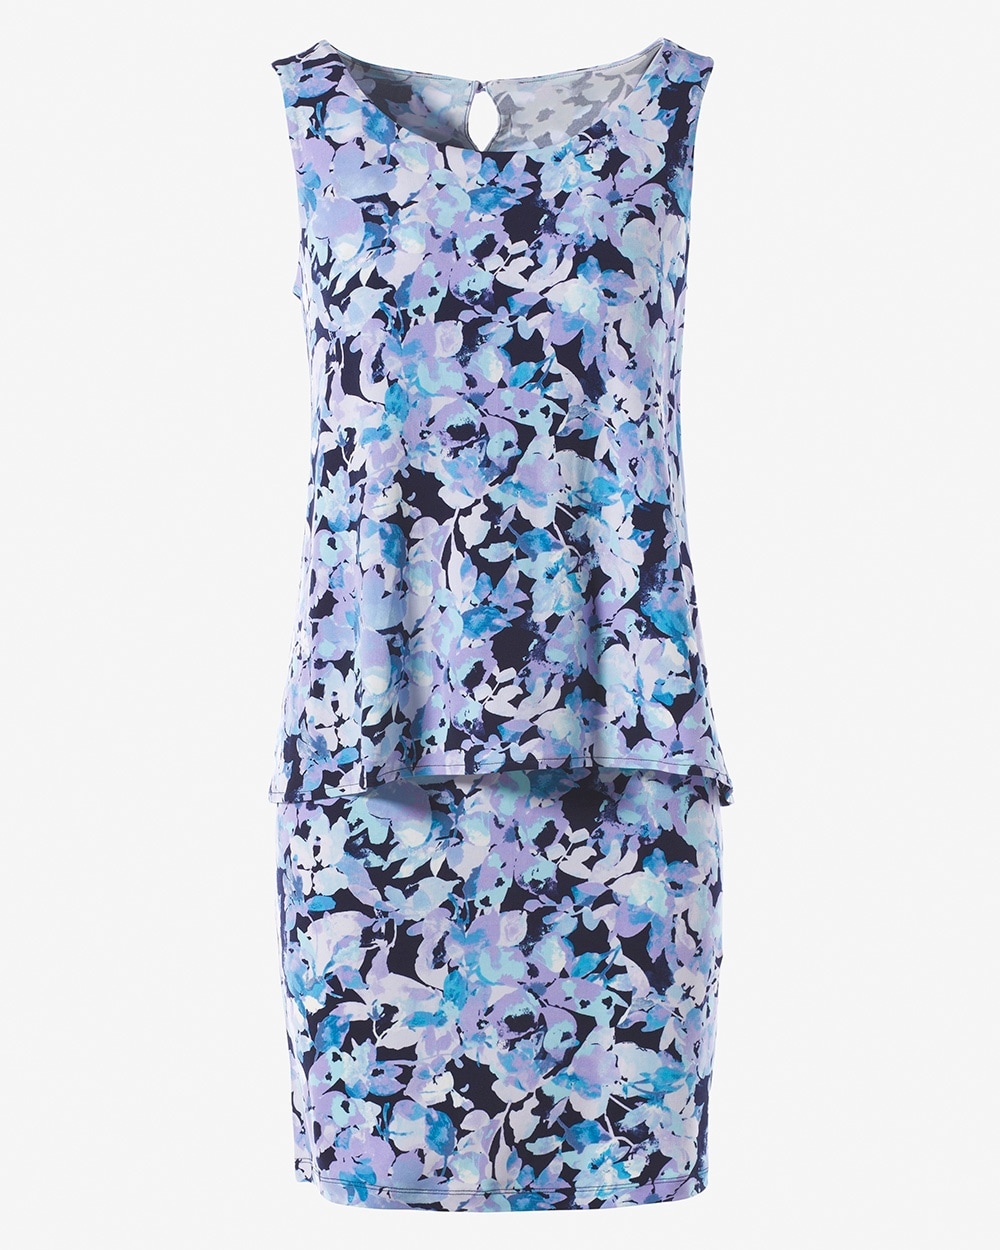 Spectrum Floral Layered Knee-Length Dress